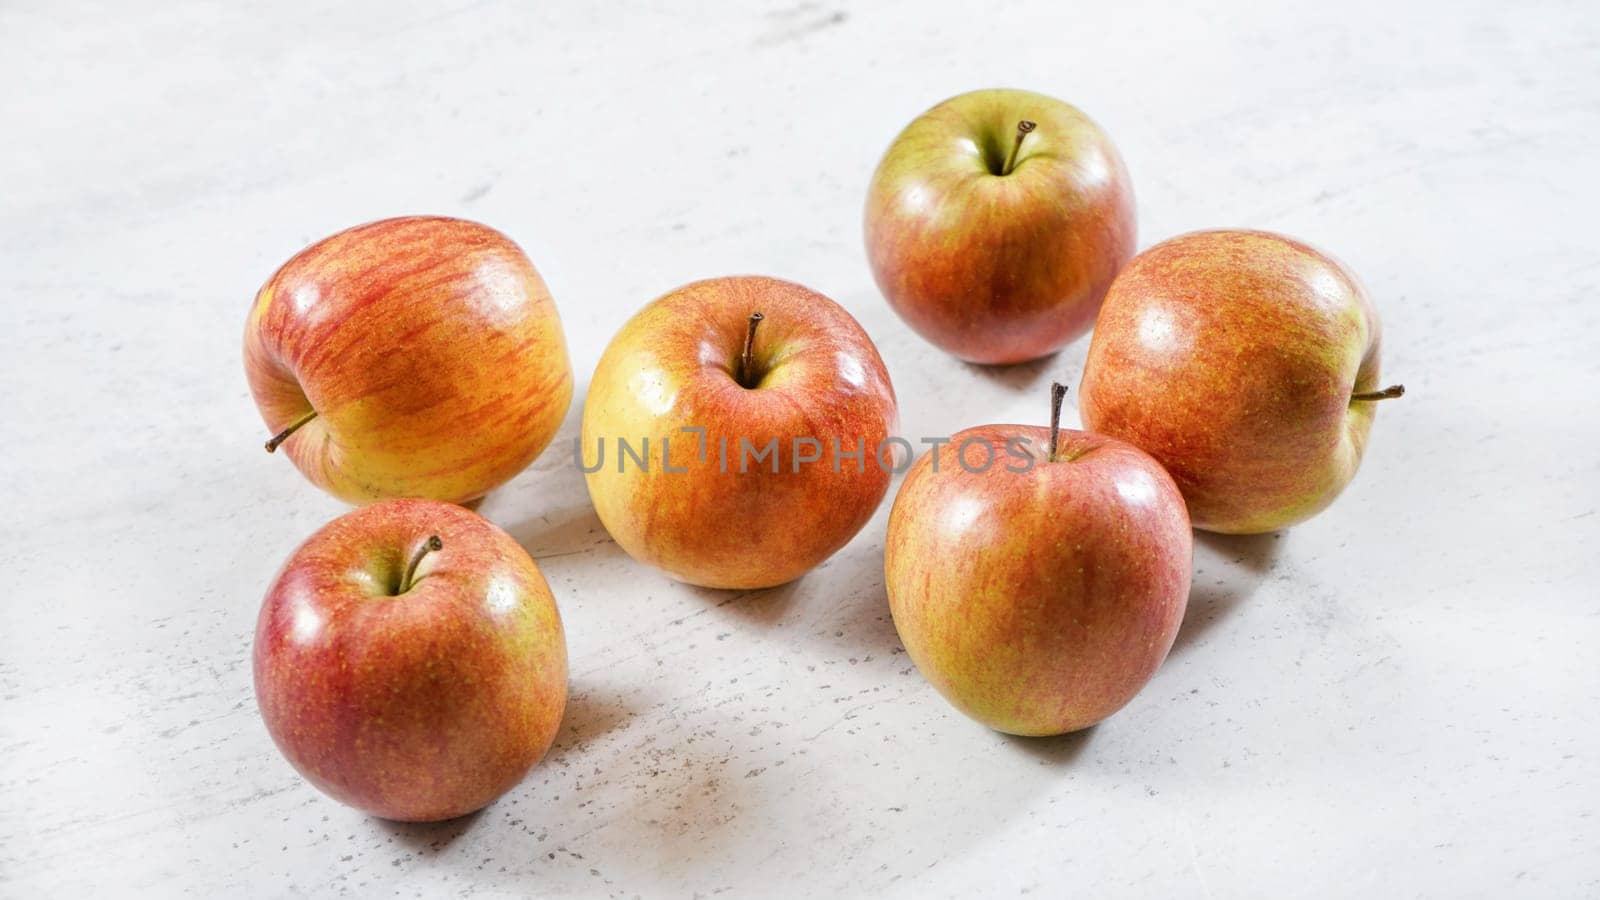 Red / yellow shiny apples (kiku variety) on white working board